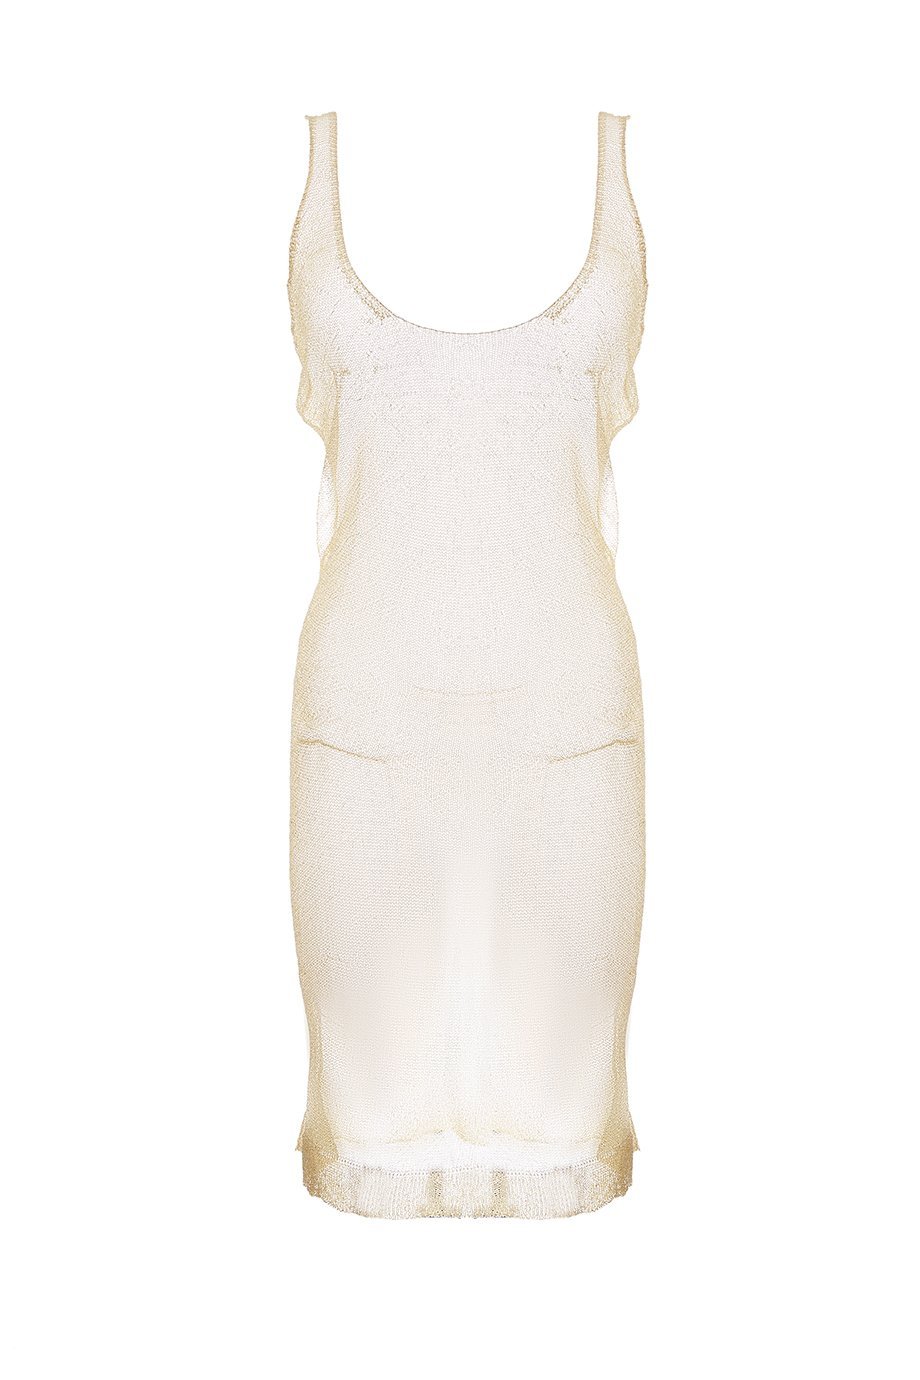 Tahlia Dress